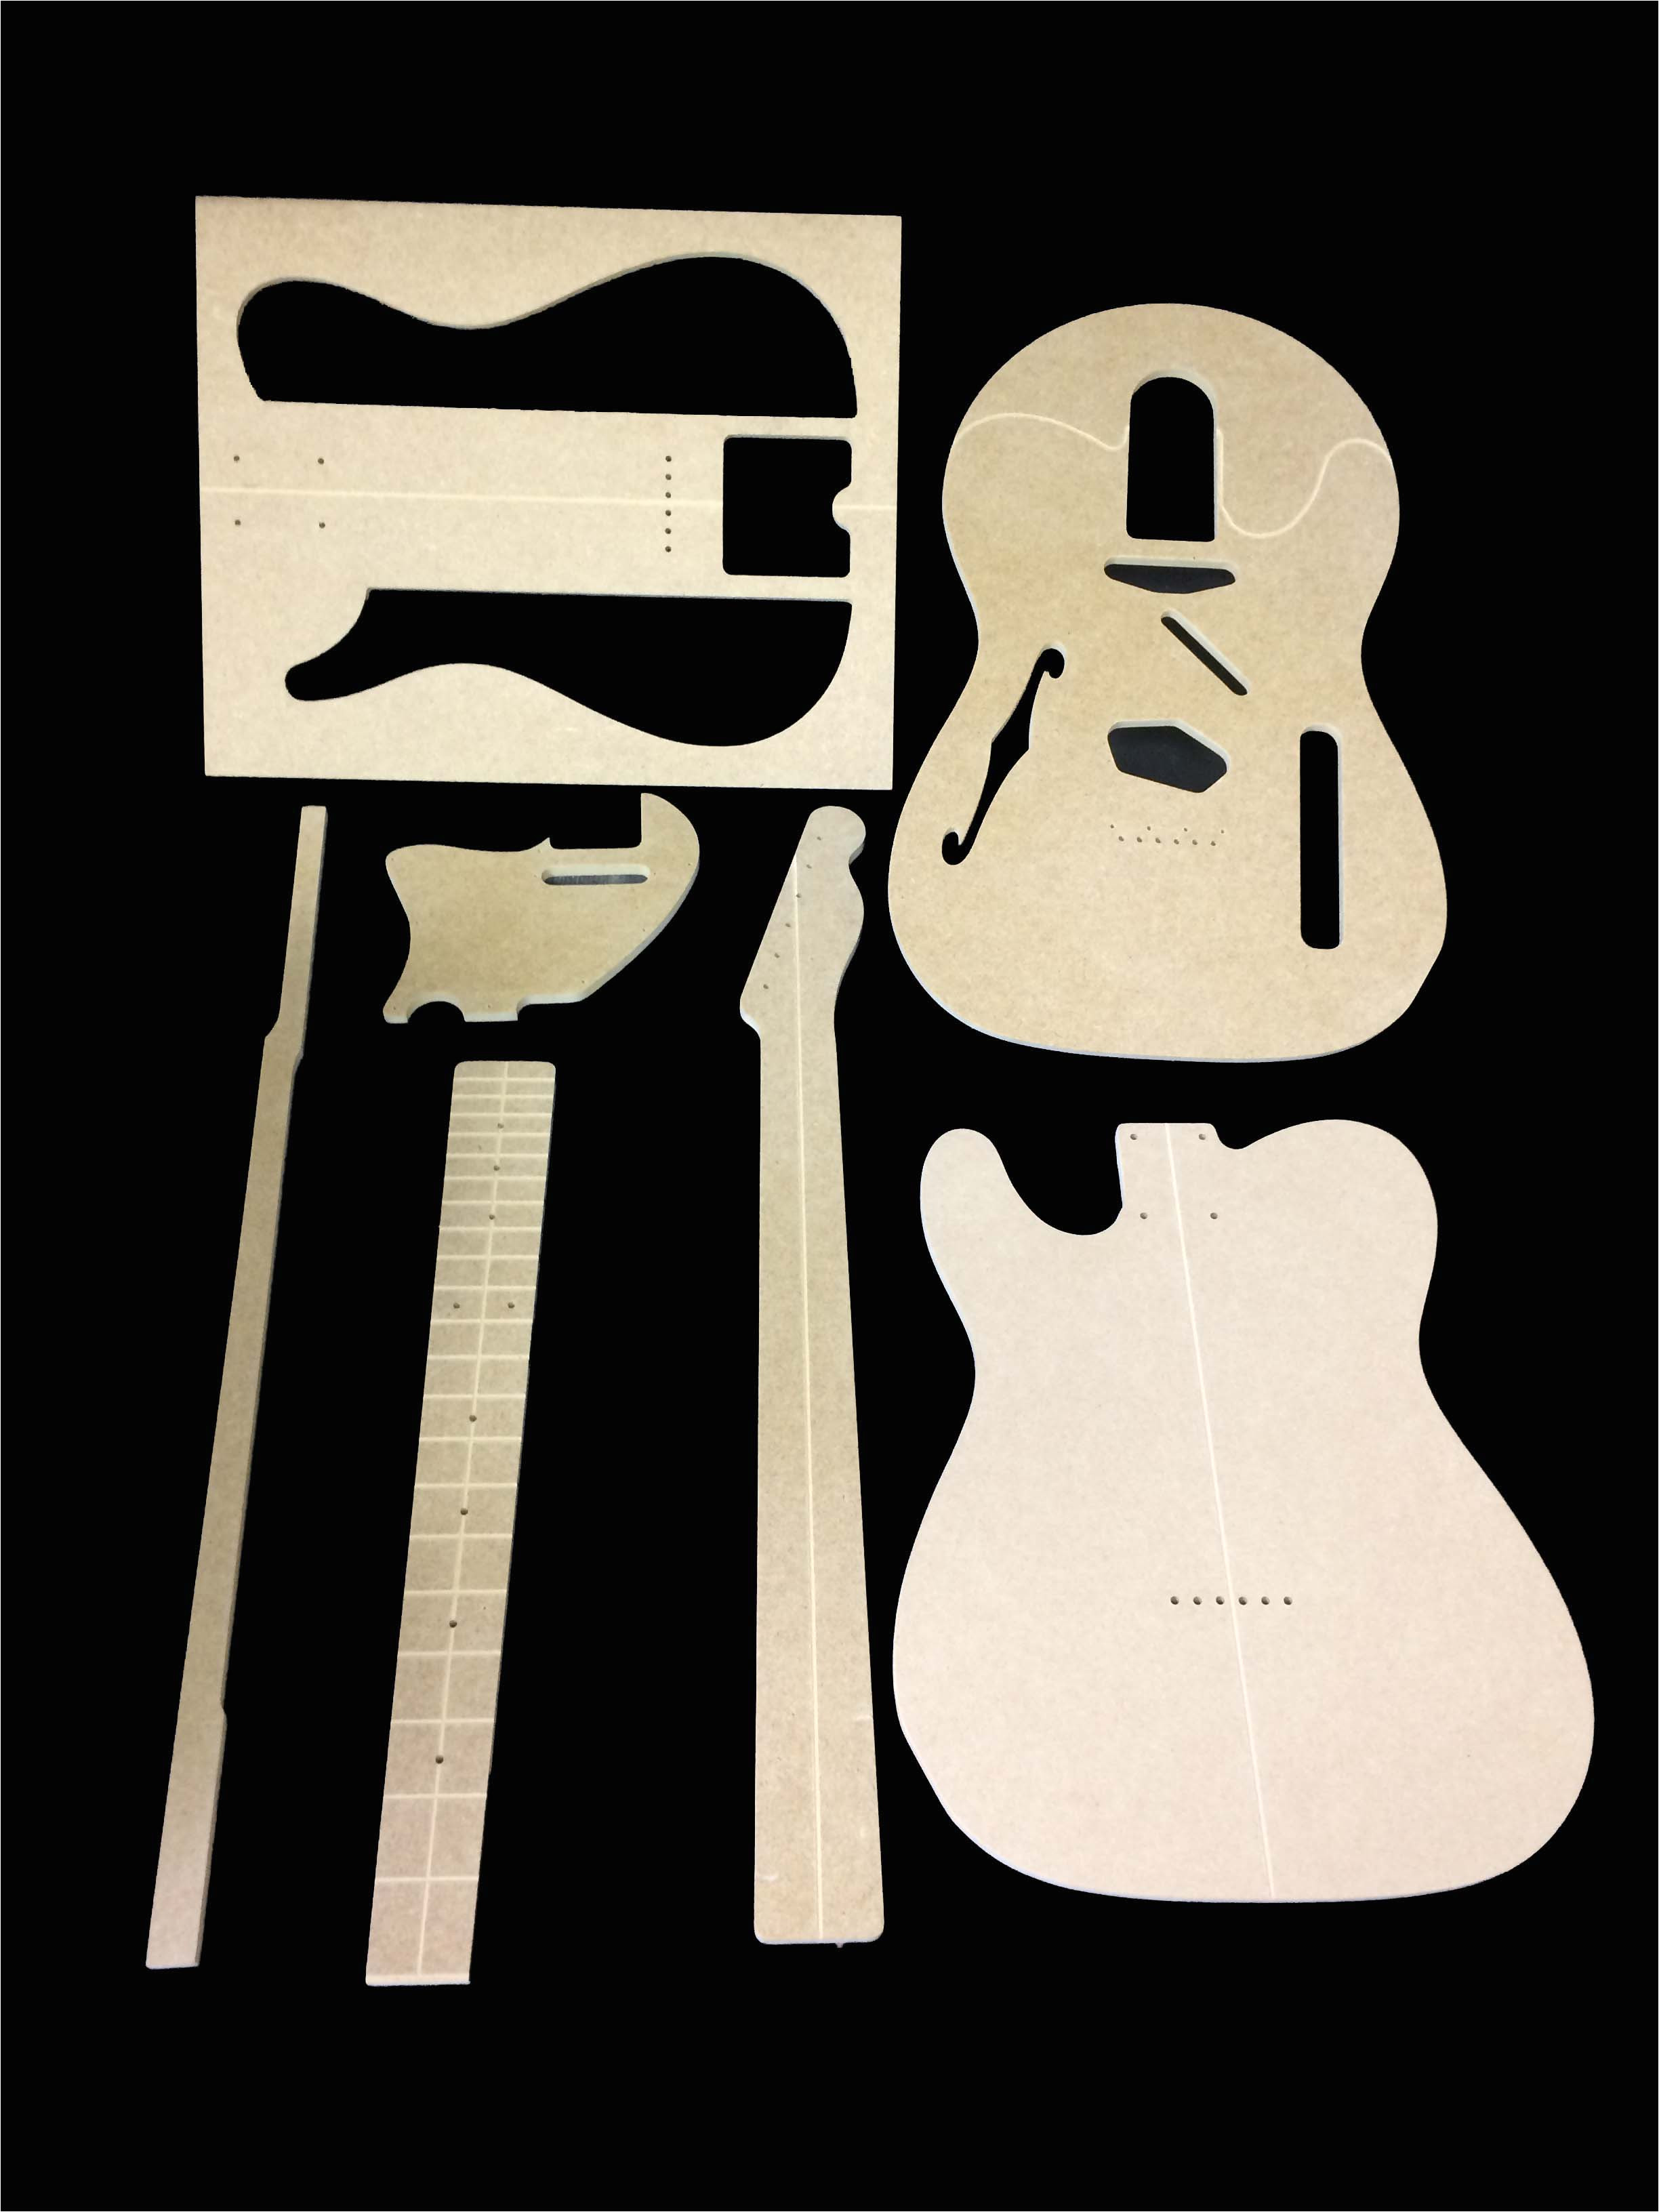 telecaster guitar template 2